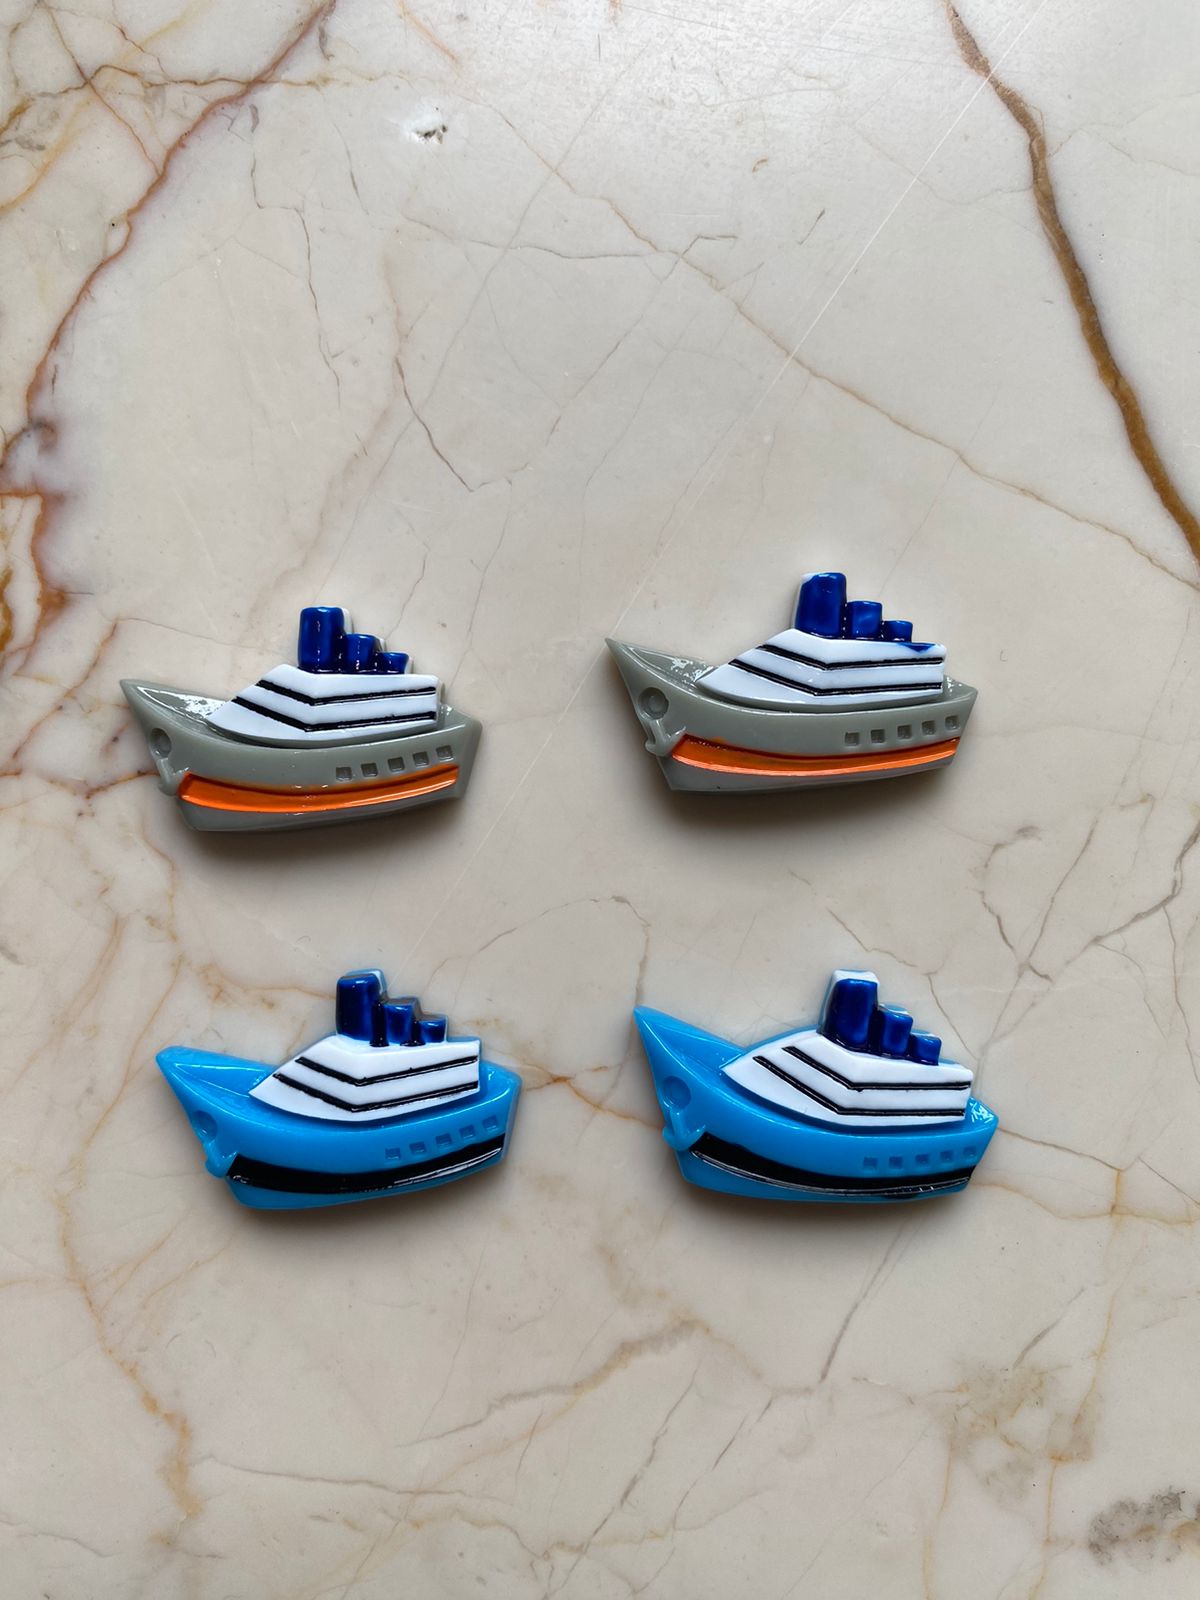 Ship / Cruise miniature 4 pc